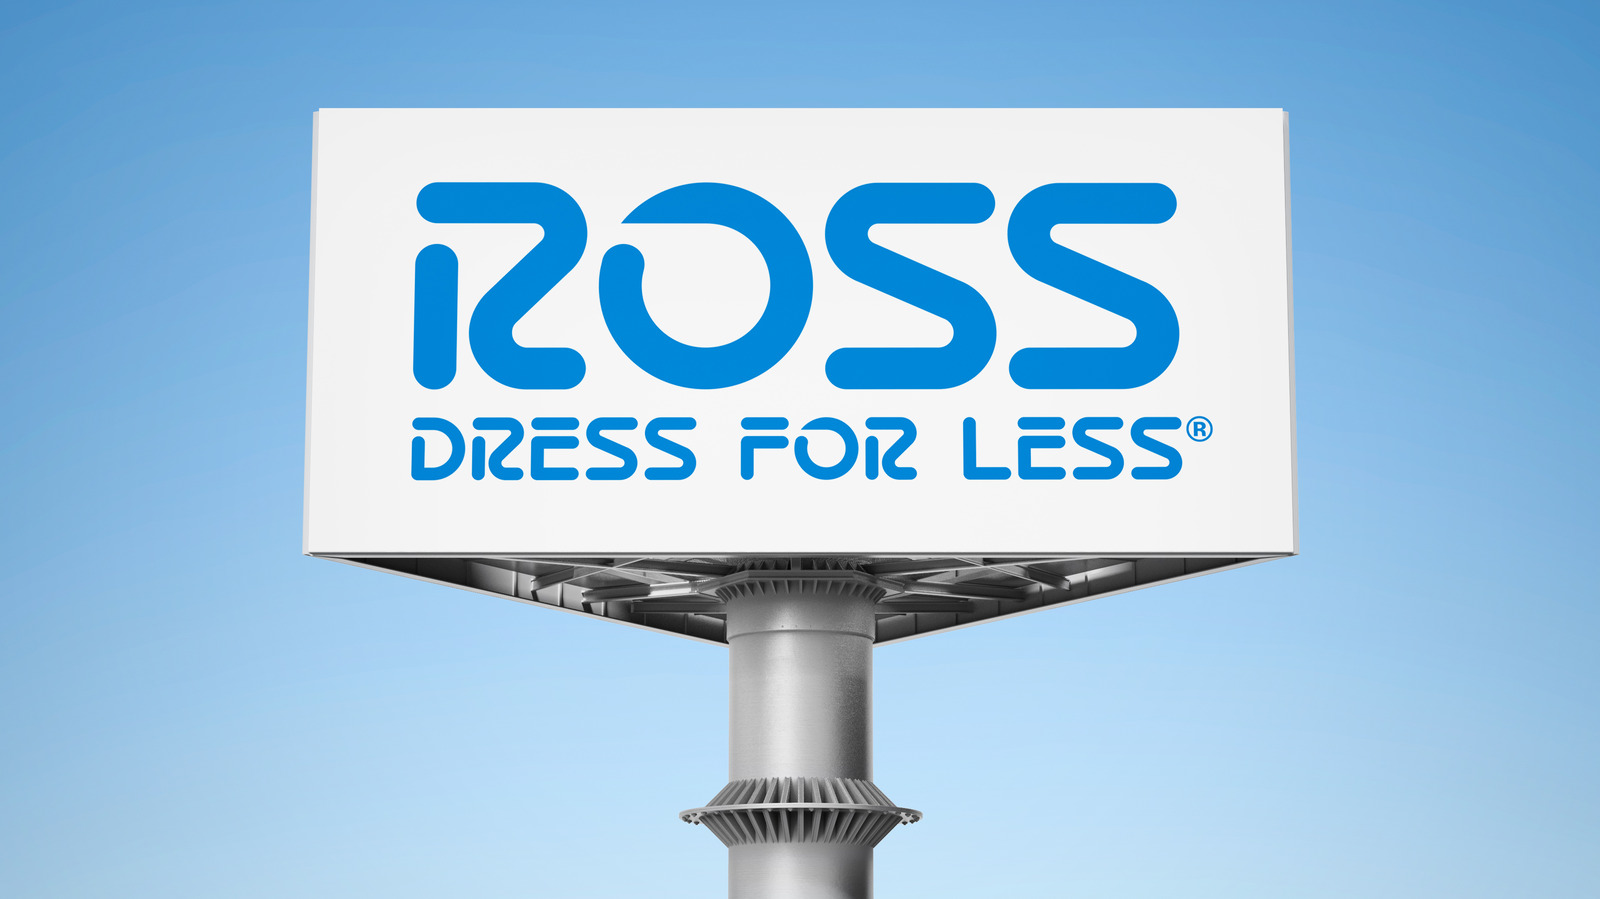 ross dress less